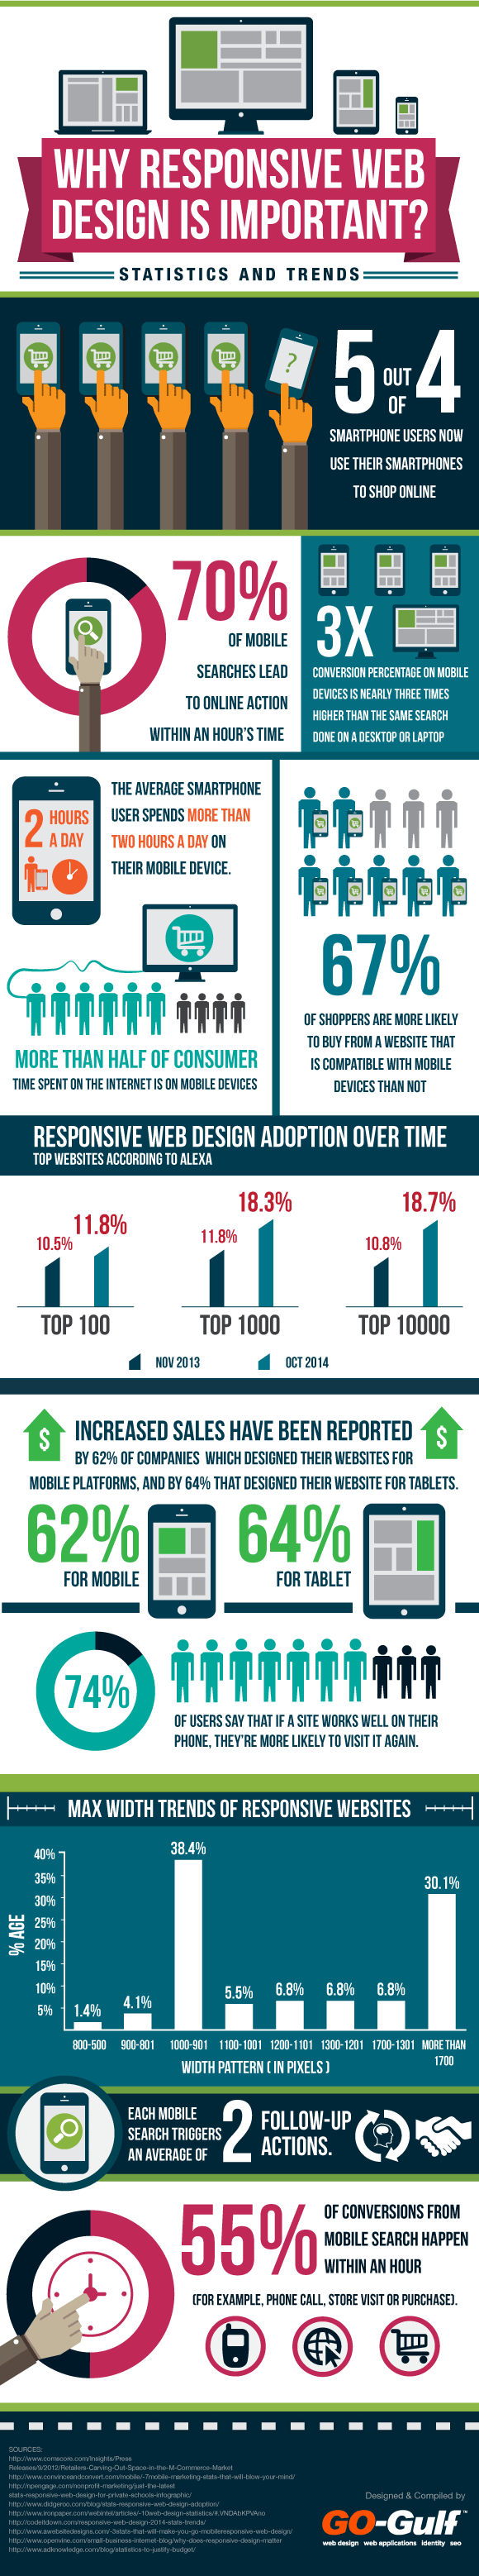 Responsive Web Design Trends in 2015 [Infographic]